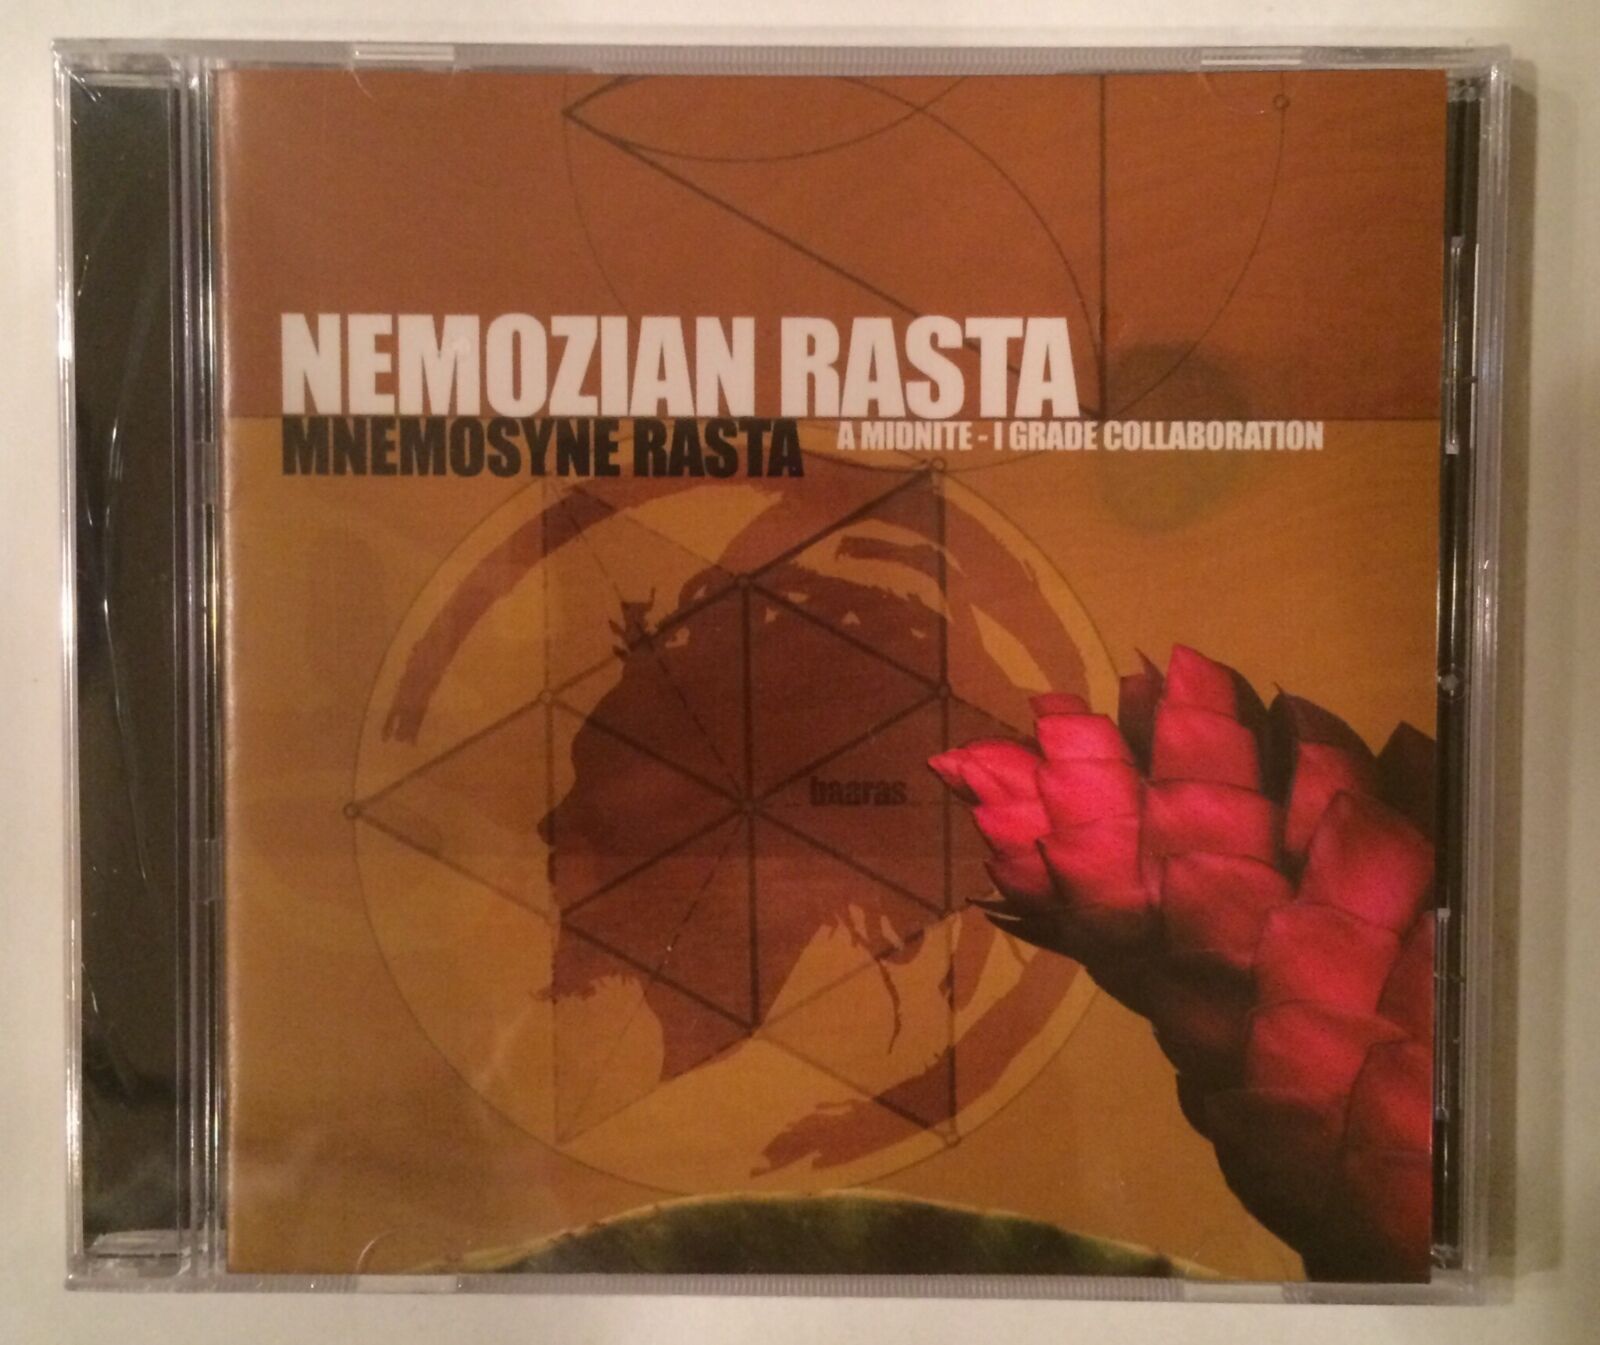 Midnite - I Grade 'Nemozian Rasta' CD (2001) Roots Reggae Brand New Sealed Rare